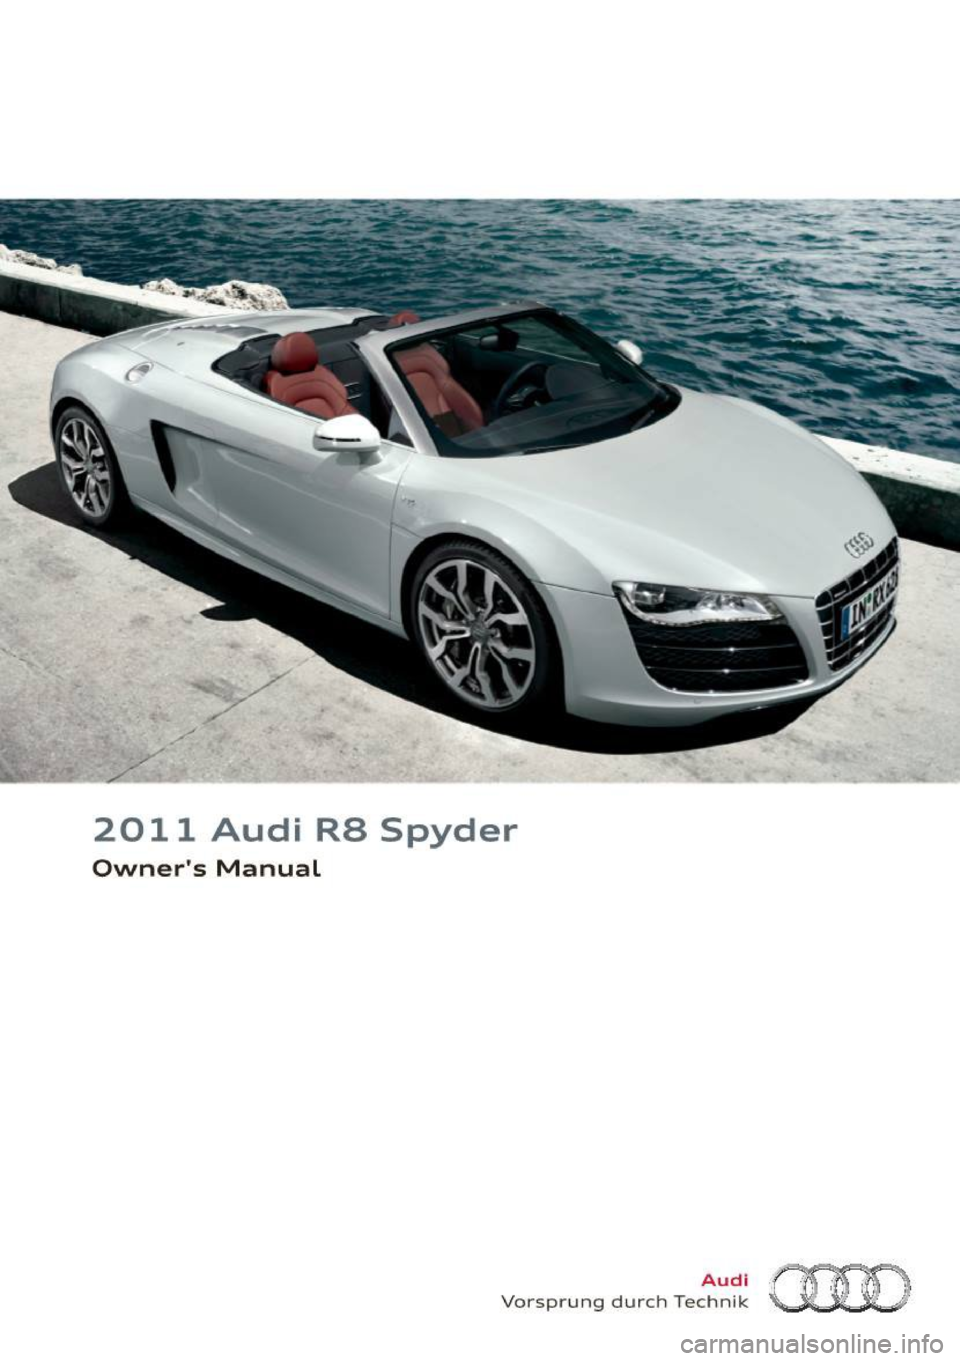 AUDI R8 SPYDER 2011  Owners Manual /" 
/ ....___._ __ ,.--::: ______________ ~~-~~~~--------------- ---
2011  Audi RS Spyder 
Owners  Manual 
Audi 
Vorsprung  durch Technik  